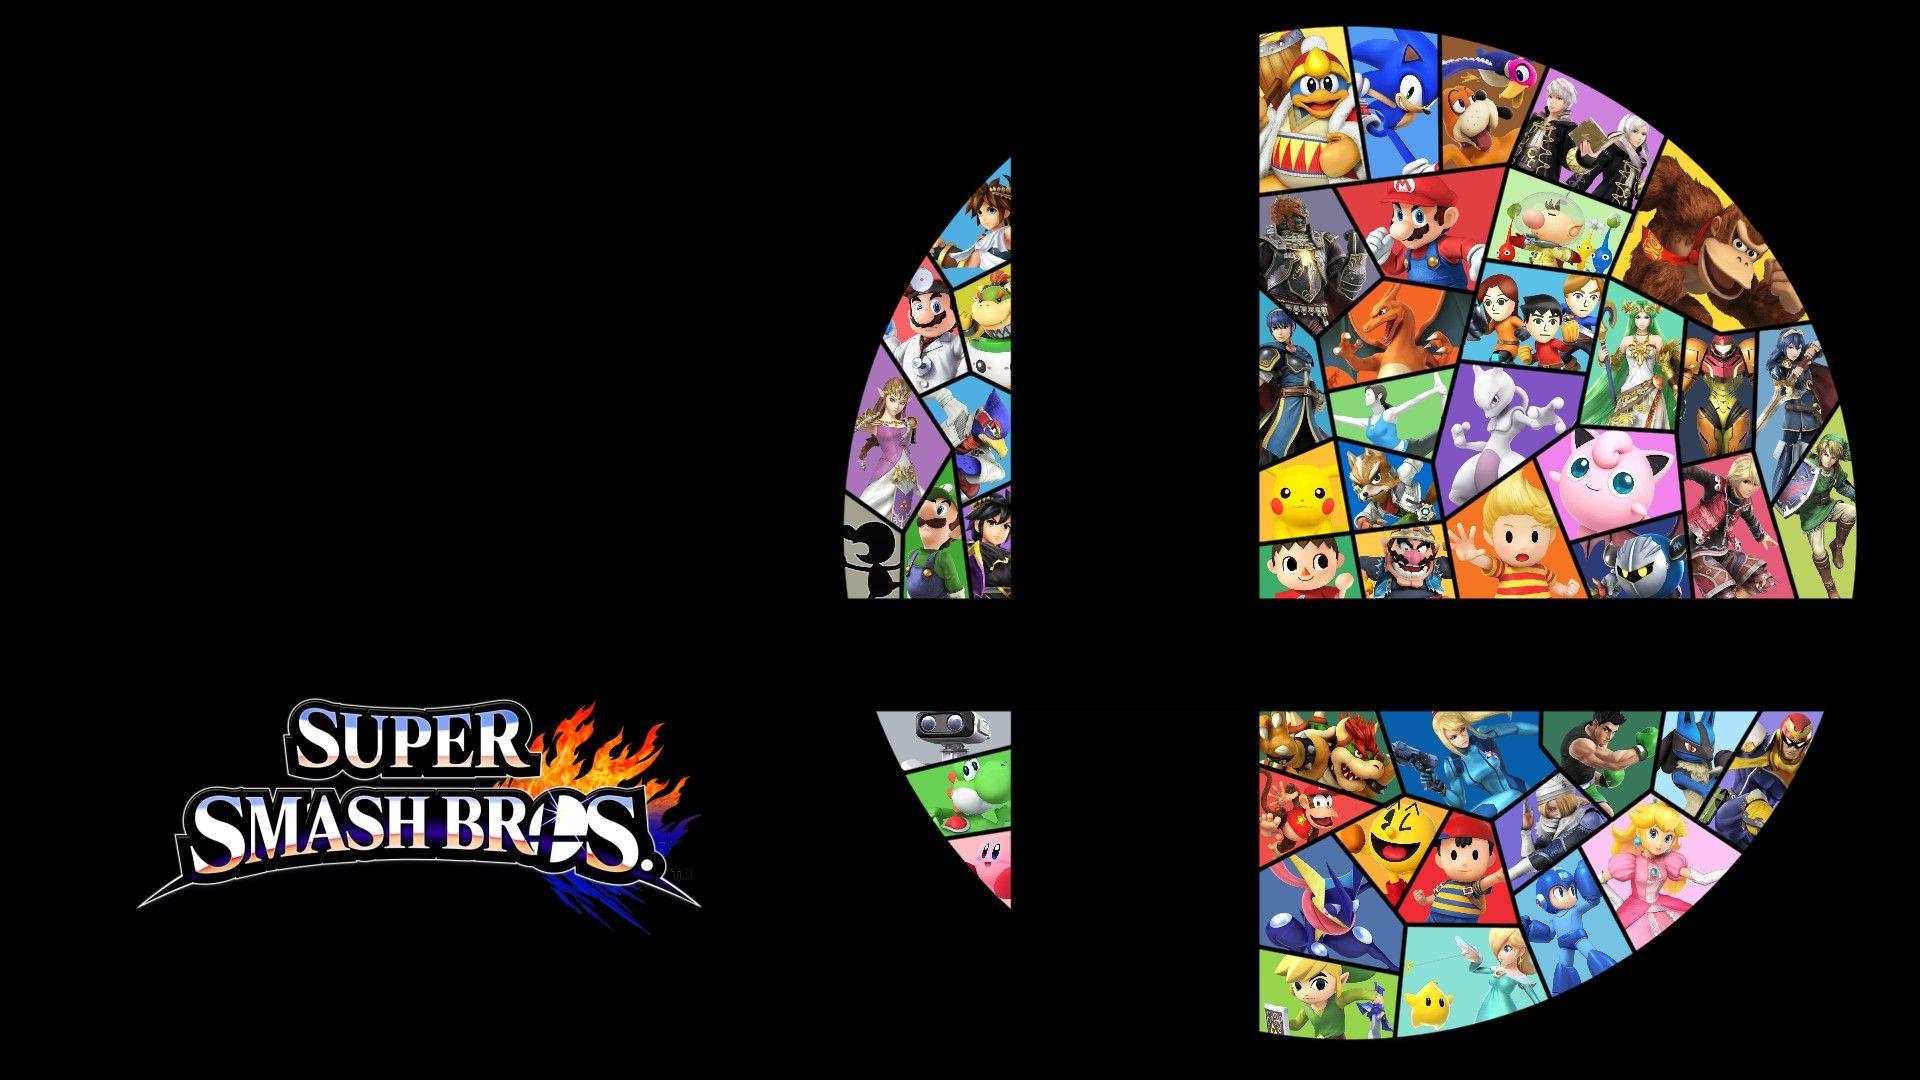 Super Smash Bros wallpapers ·① Download free beautiful wallpapers